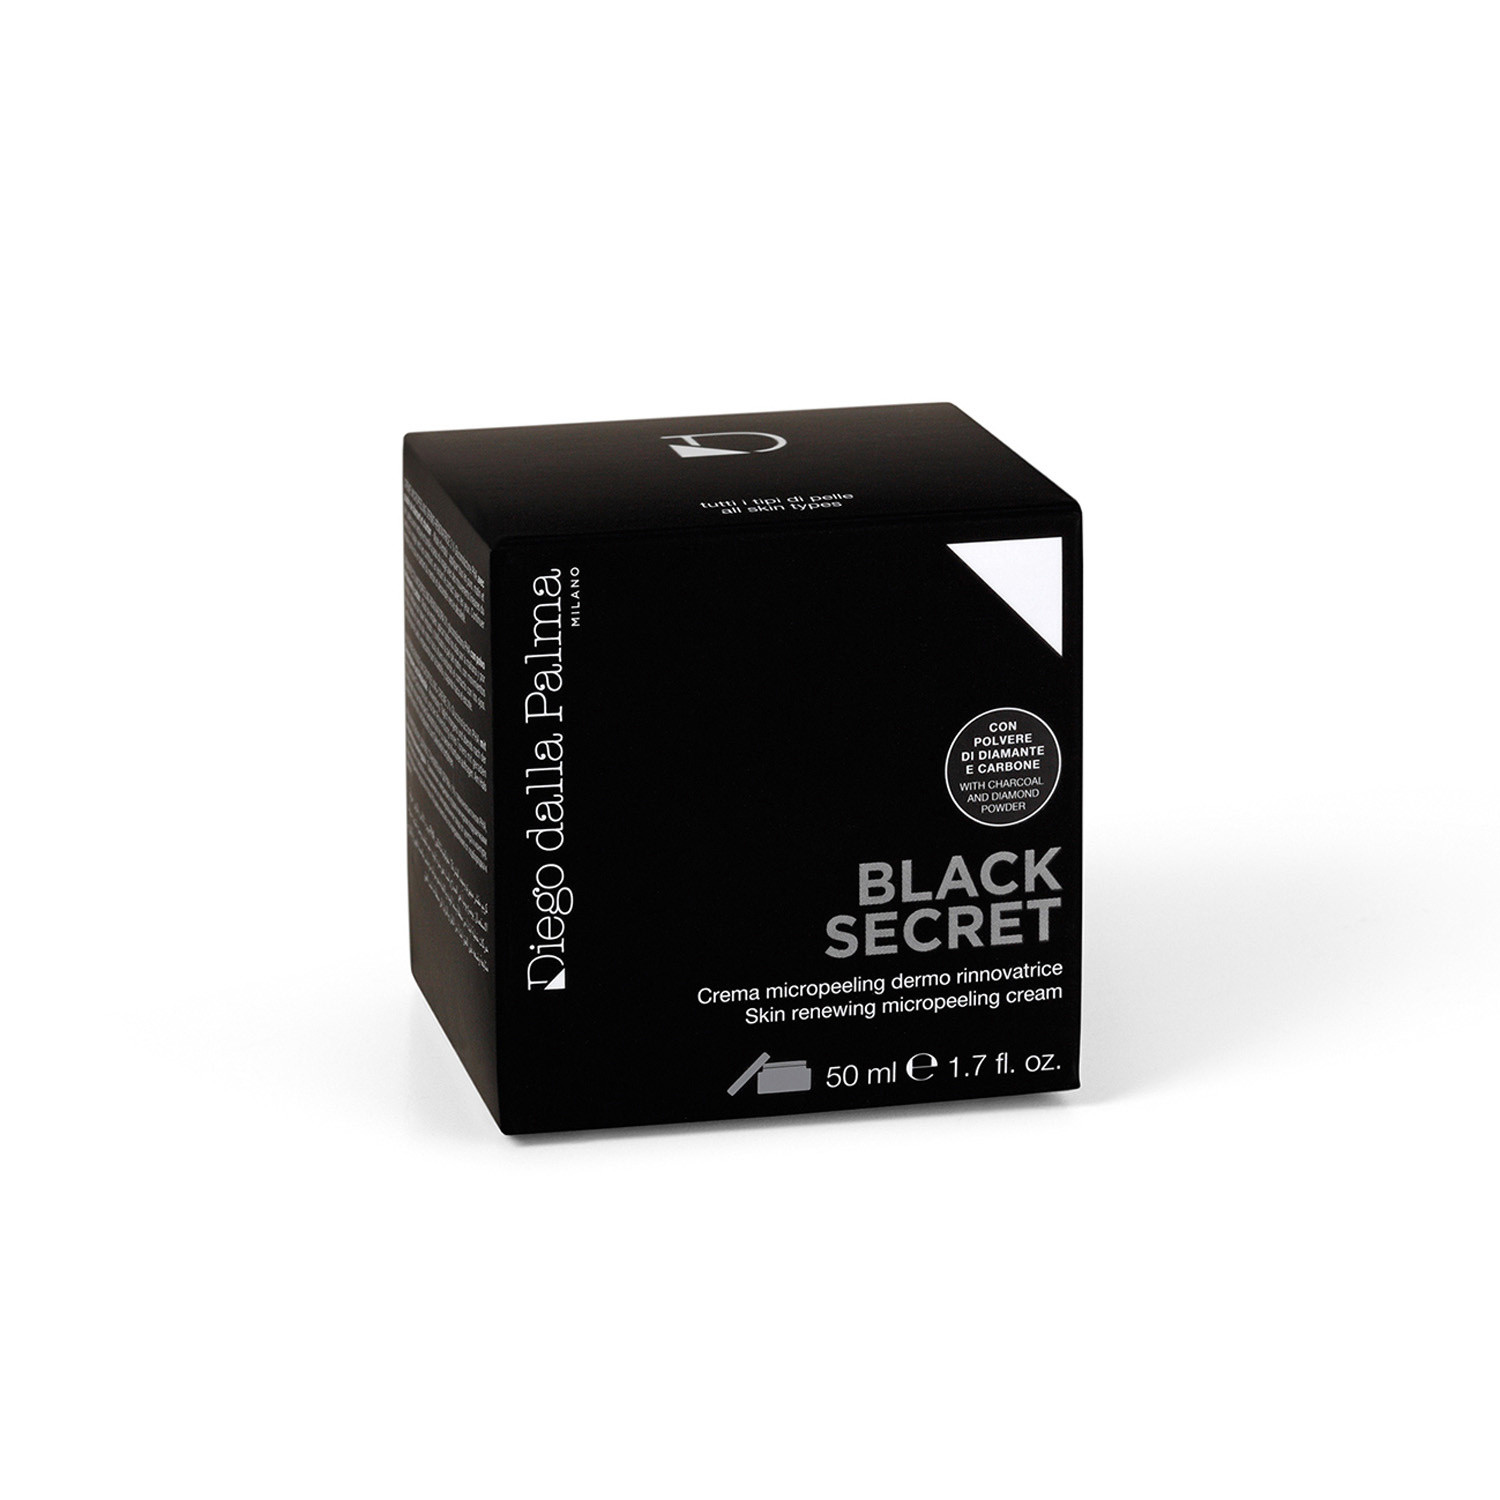 BLACK SECRET - Skin Renewing Micropeeling Cream, Black, large image number 2